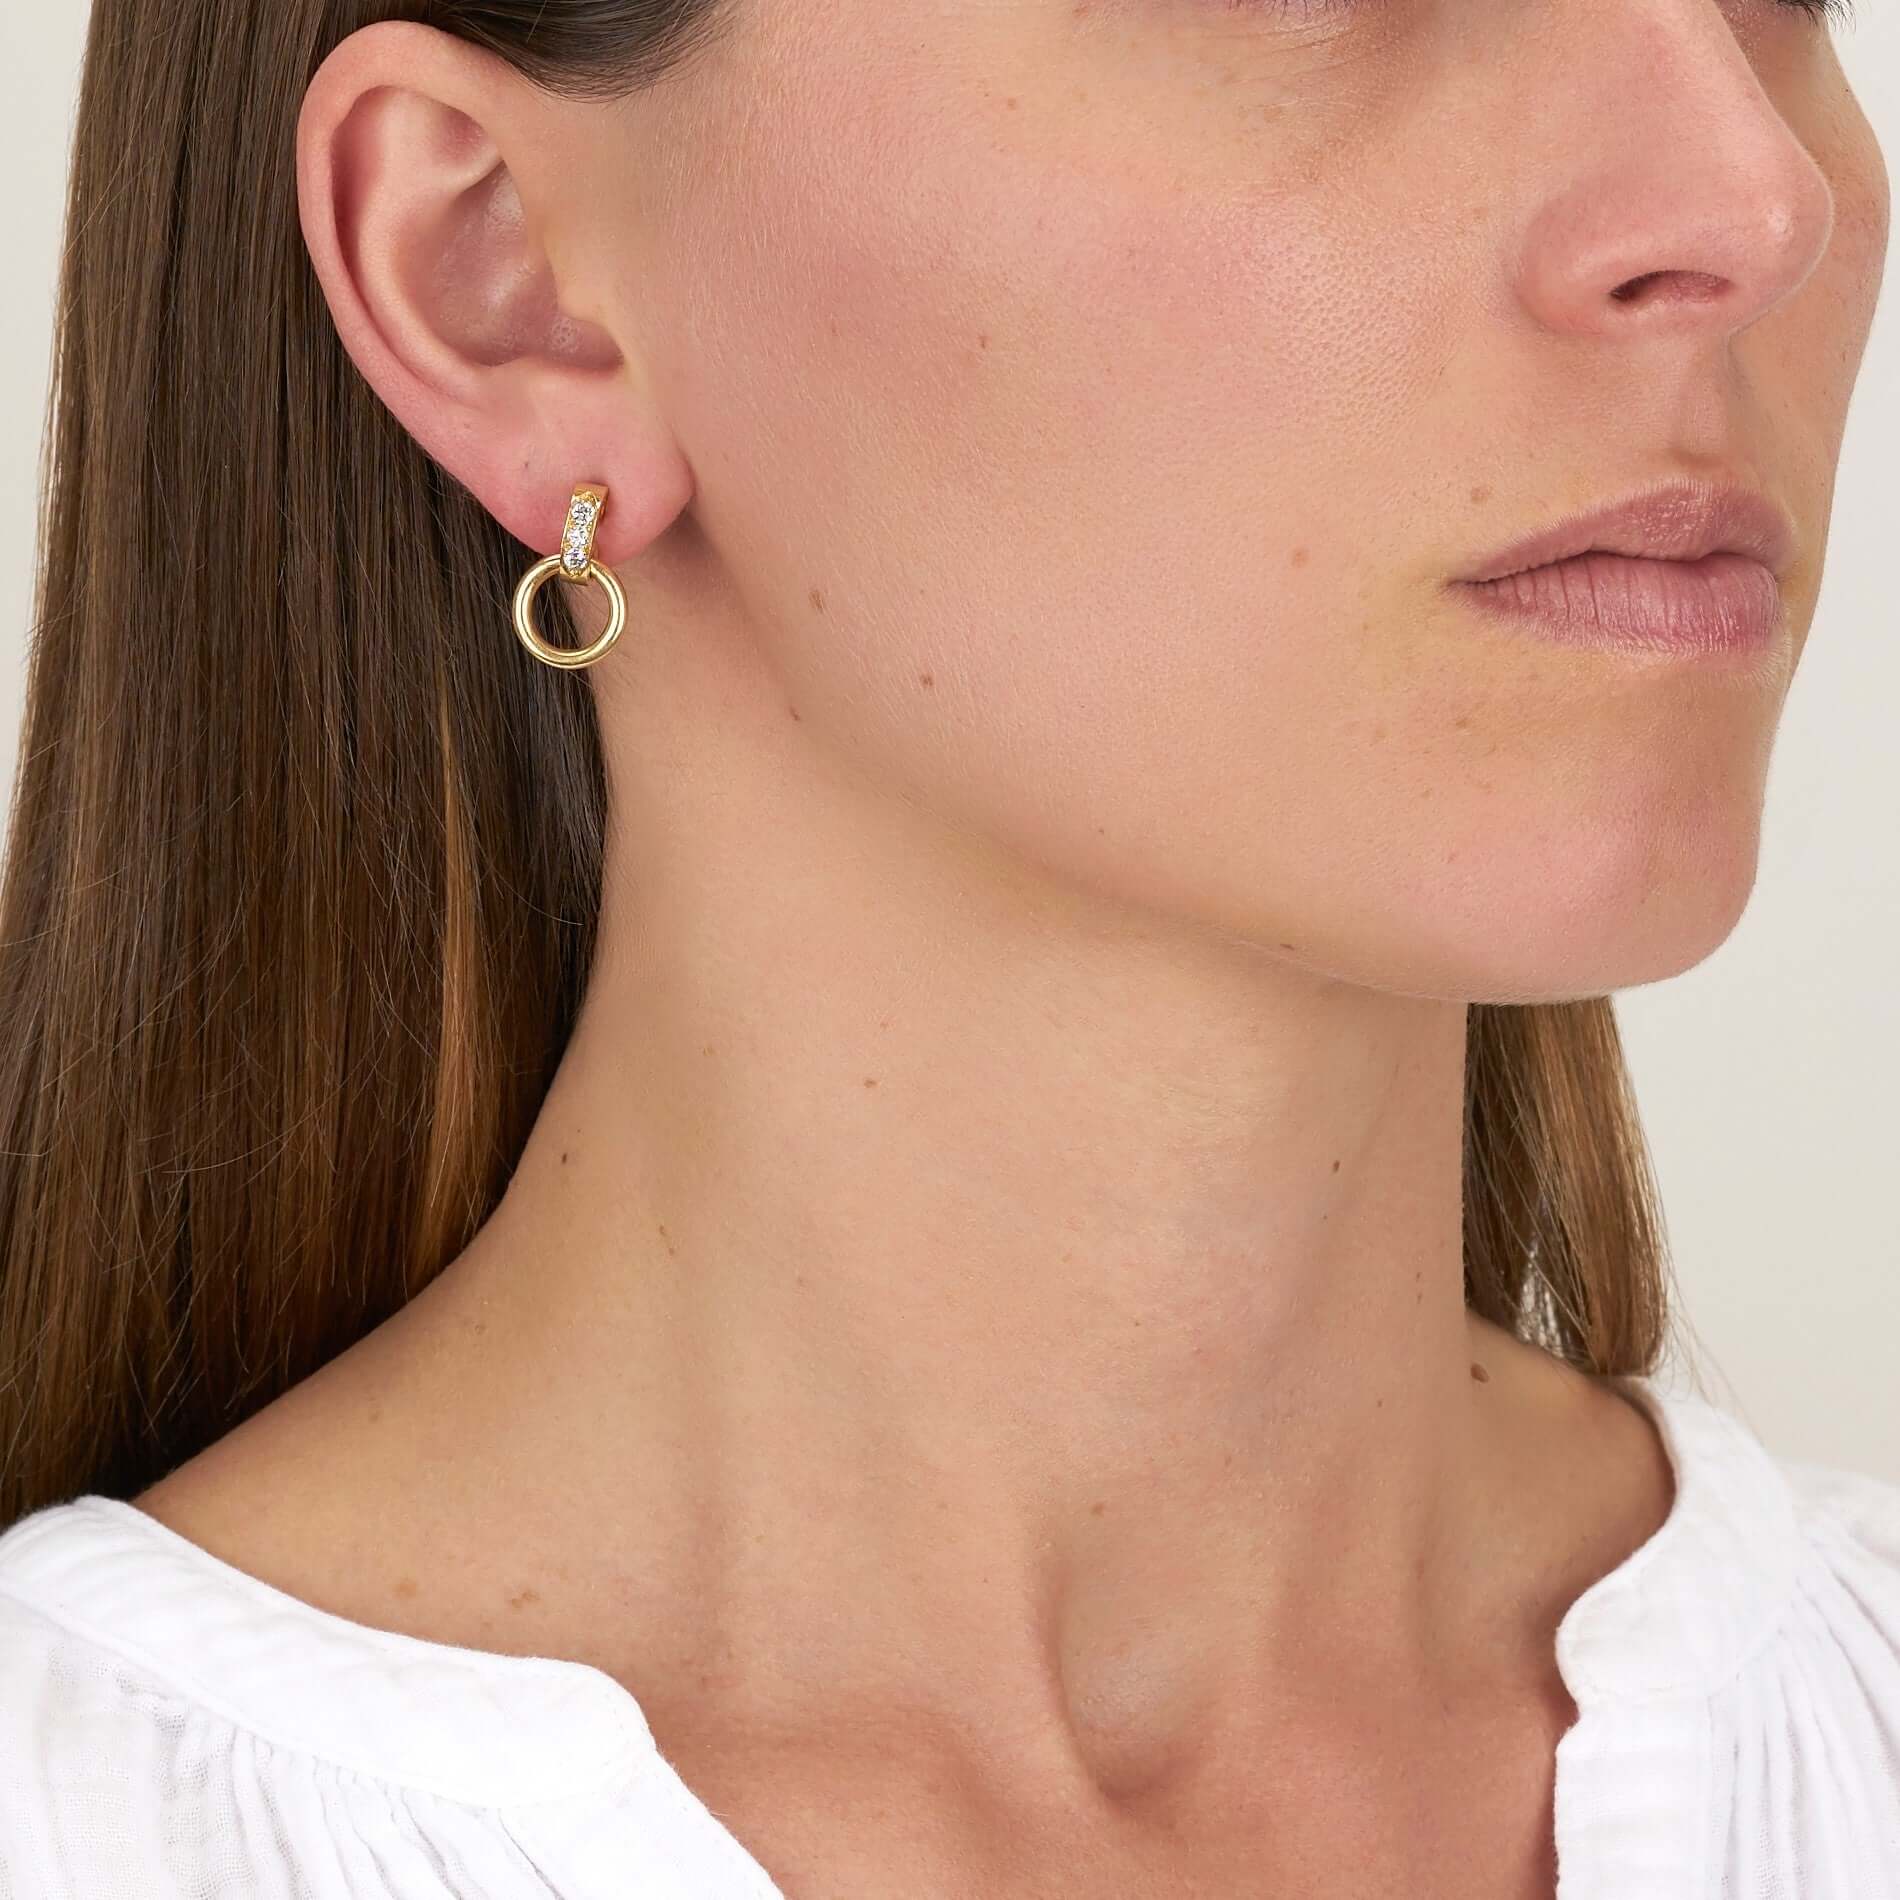 SINGLE STONE ASTRID HOOP | Earrings featuring Approximately 0.35ctw G-H/VS old European cut diamonds prong set in 18K yellow gold hoop earrings.